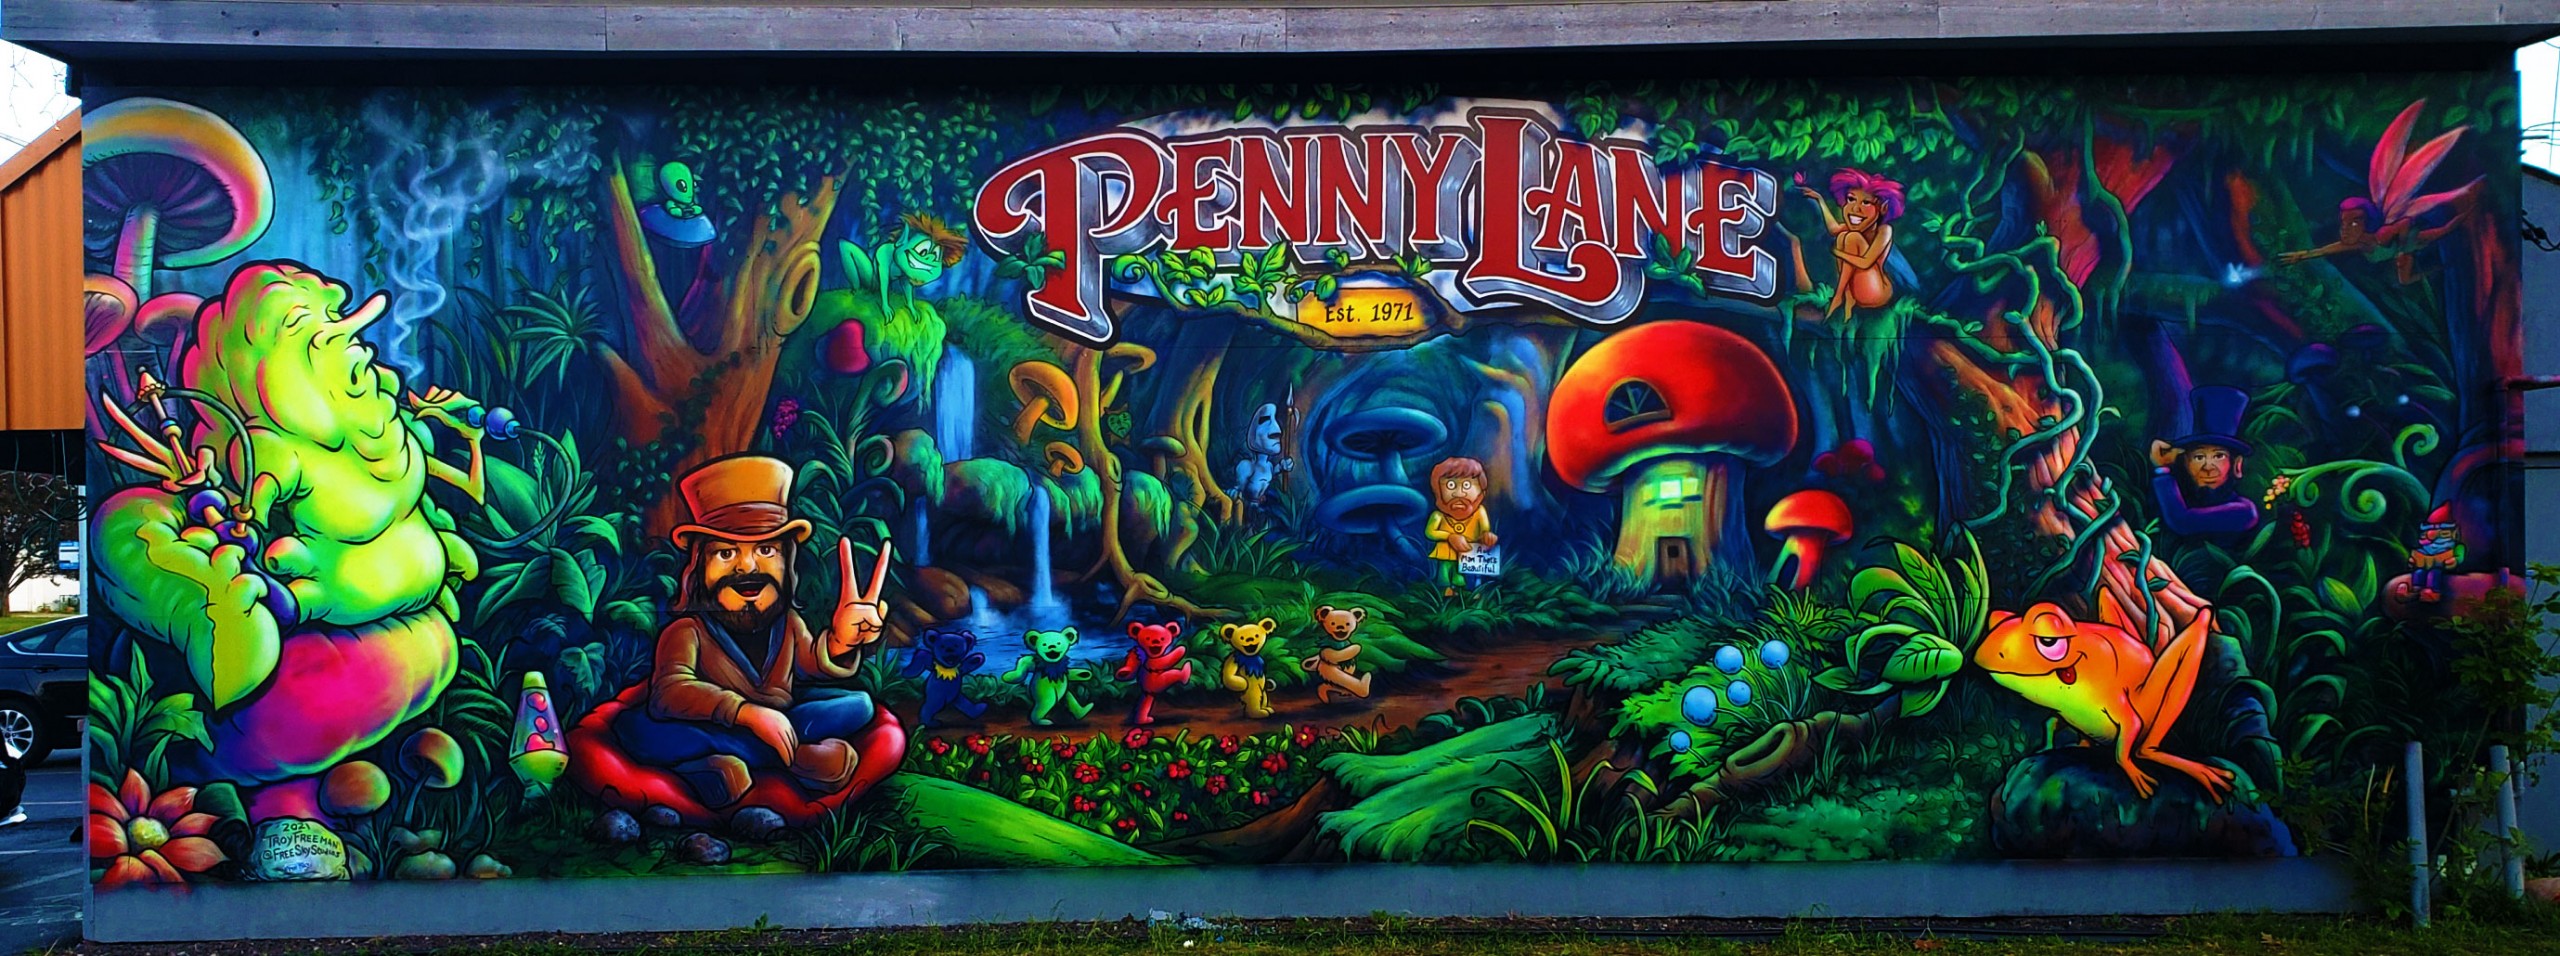 penny lane springfield il fantasy mural